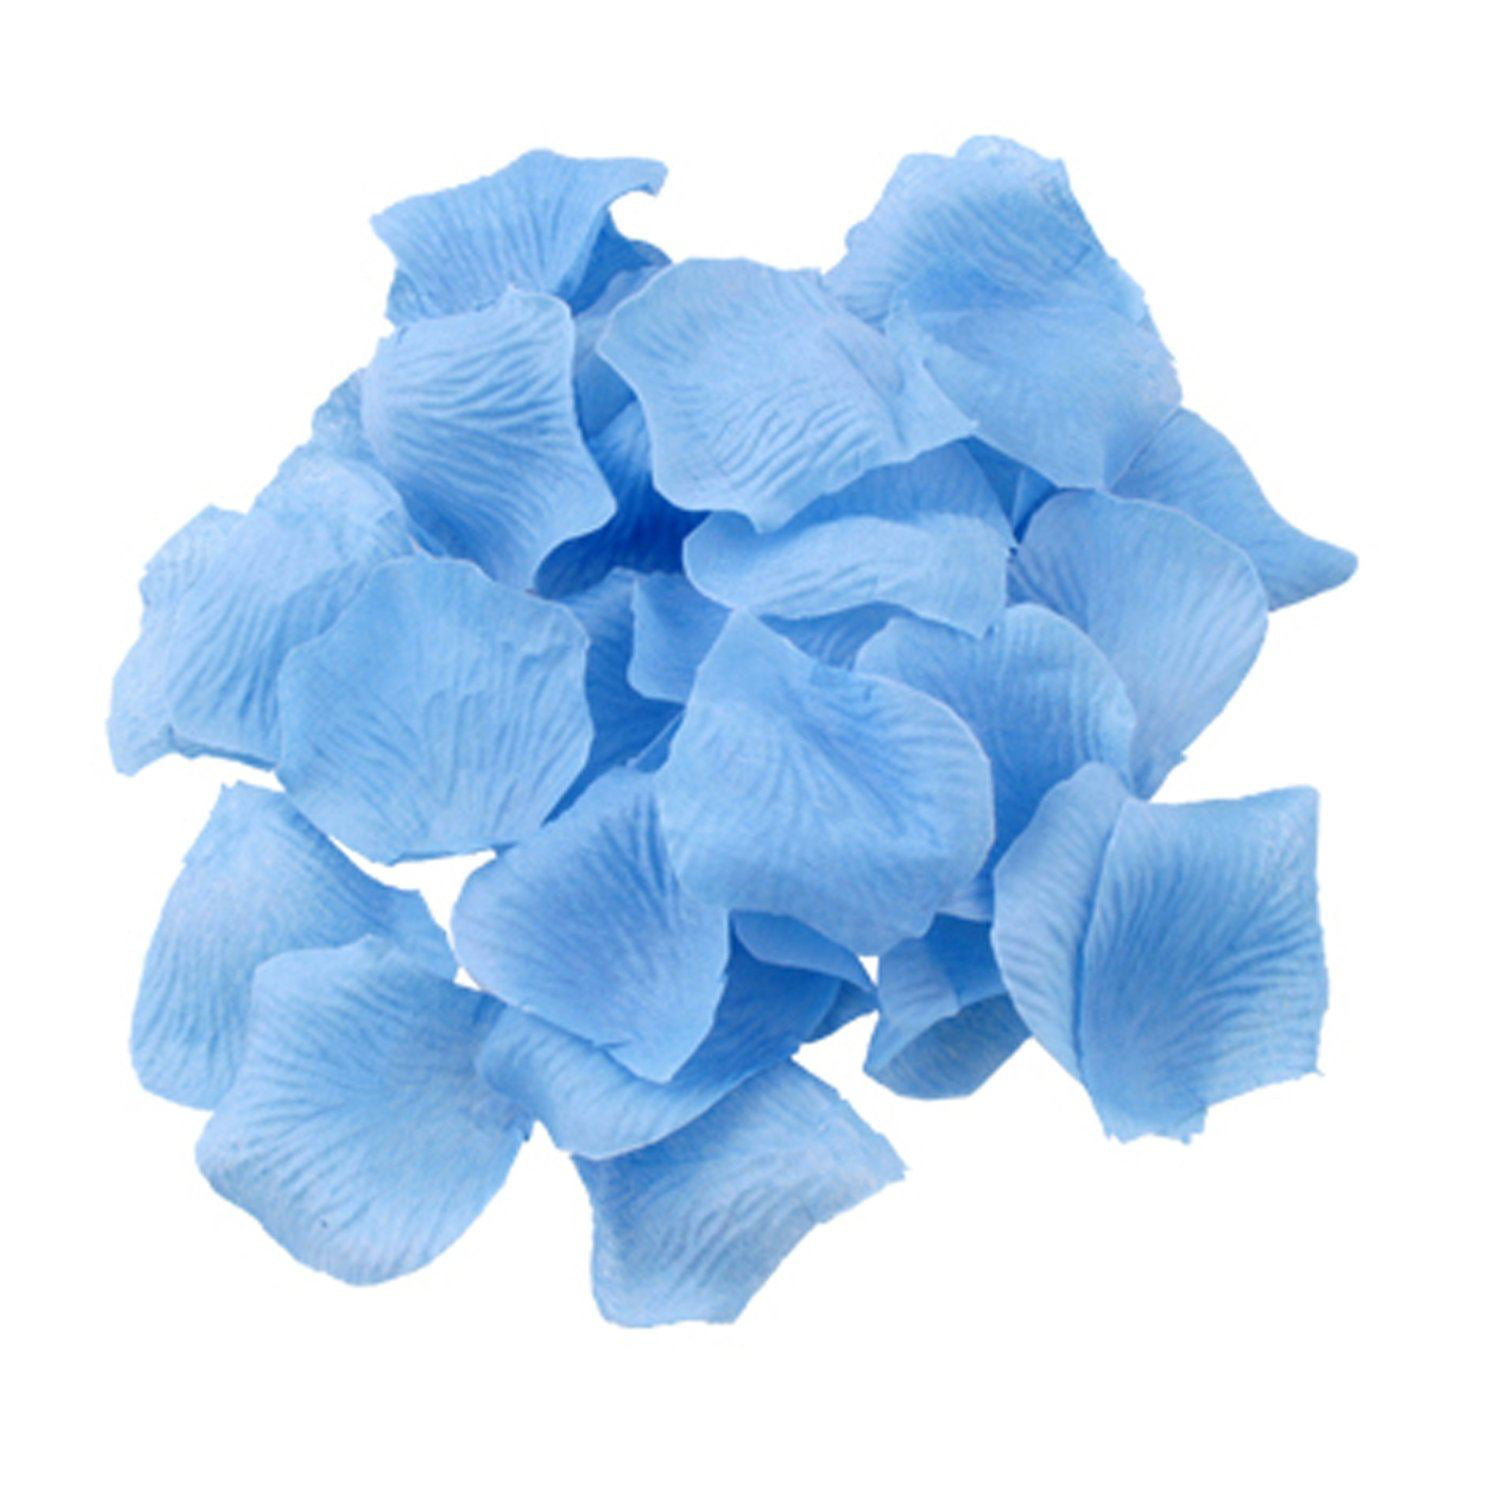 300 Light Blue Silk Rose Petals Confetti Birthday Wedding Party Decorations 